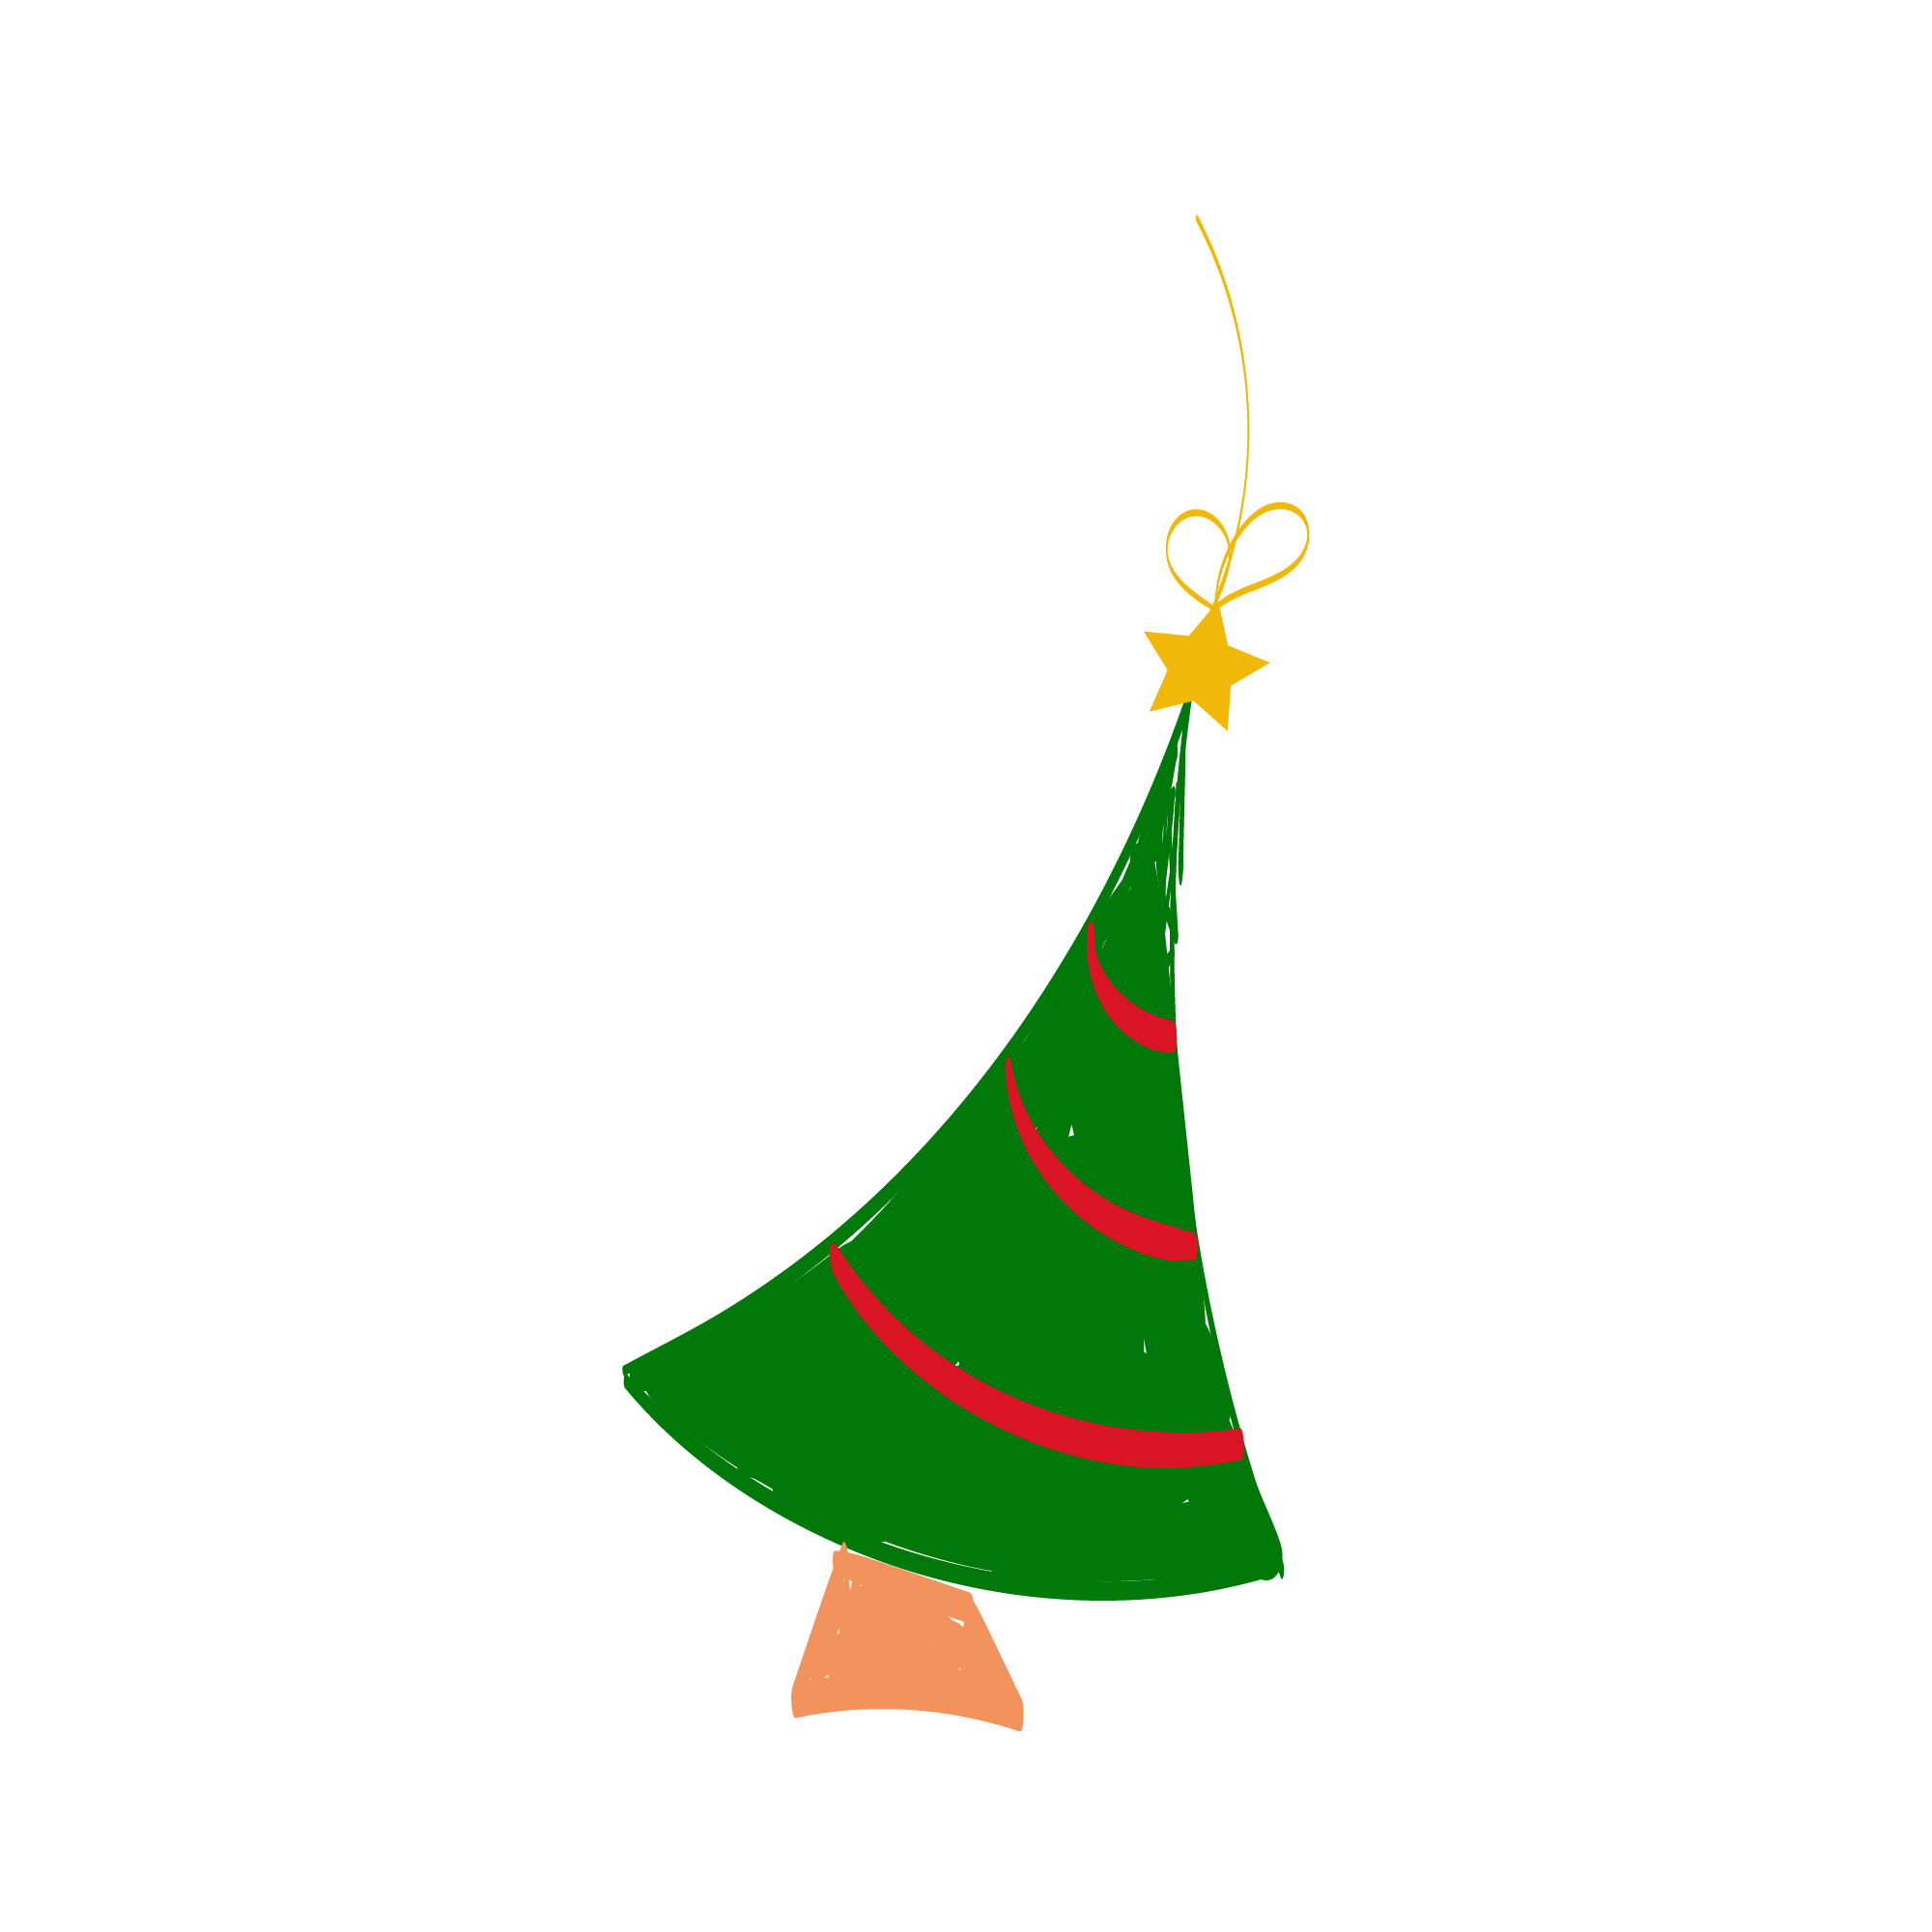 Image with Christmas tree design.